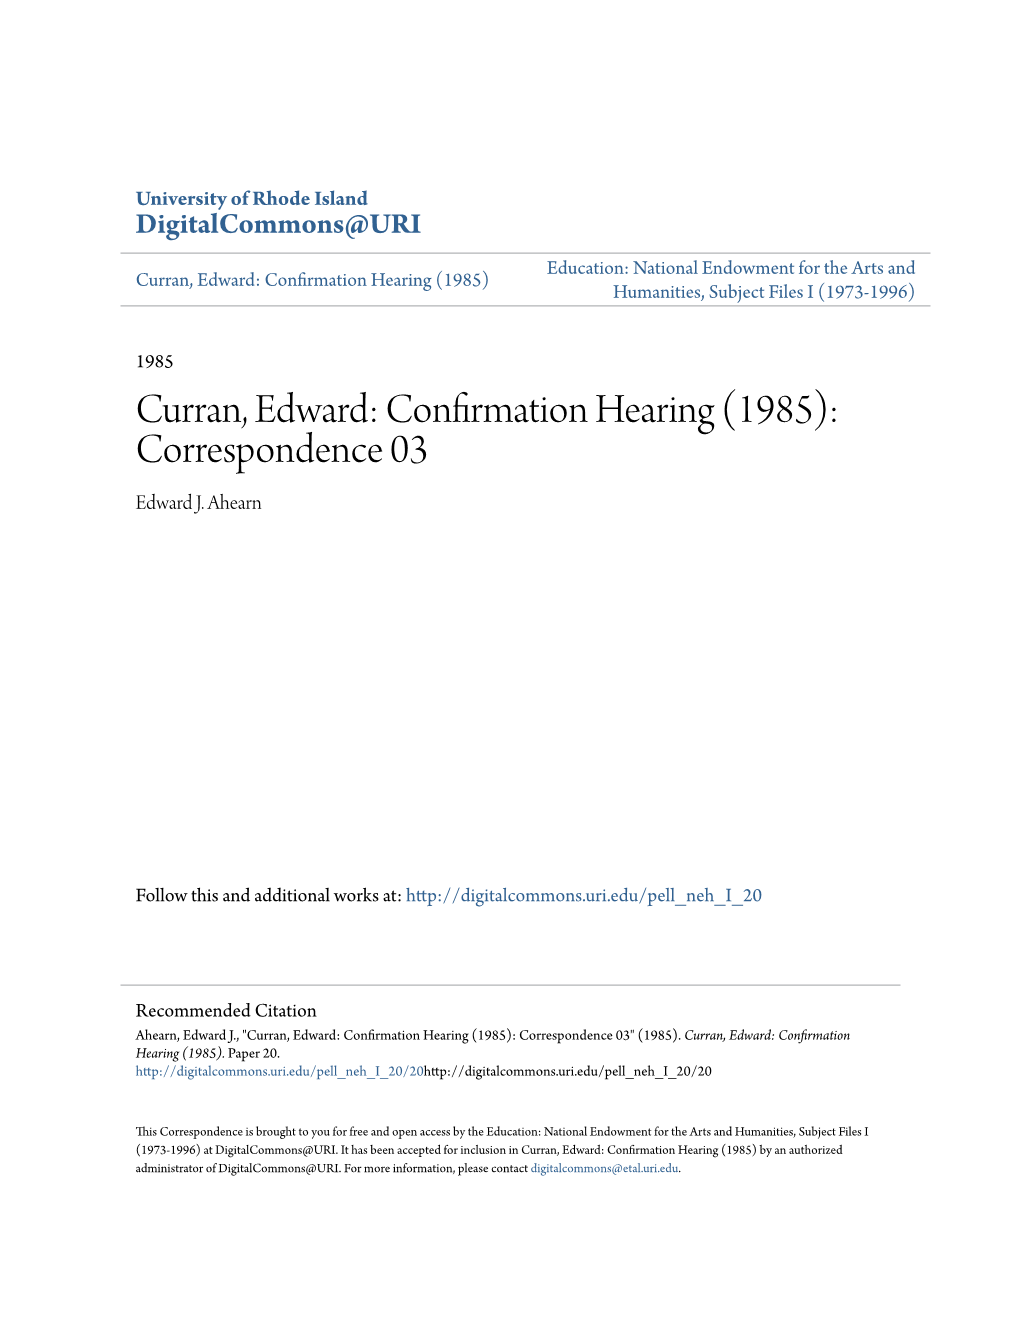 Curran, Edward: Confirmation Hearing (1985): Correspondence 03 Edward J